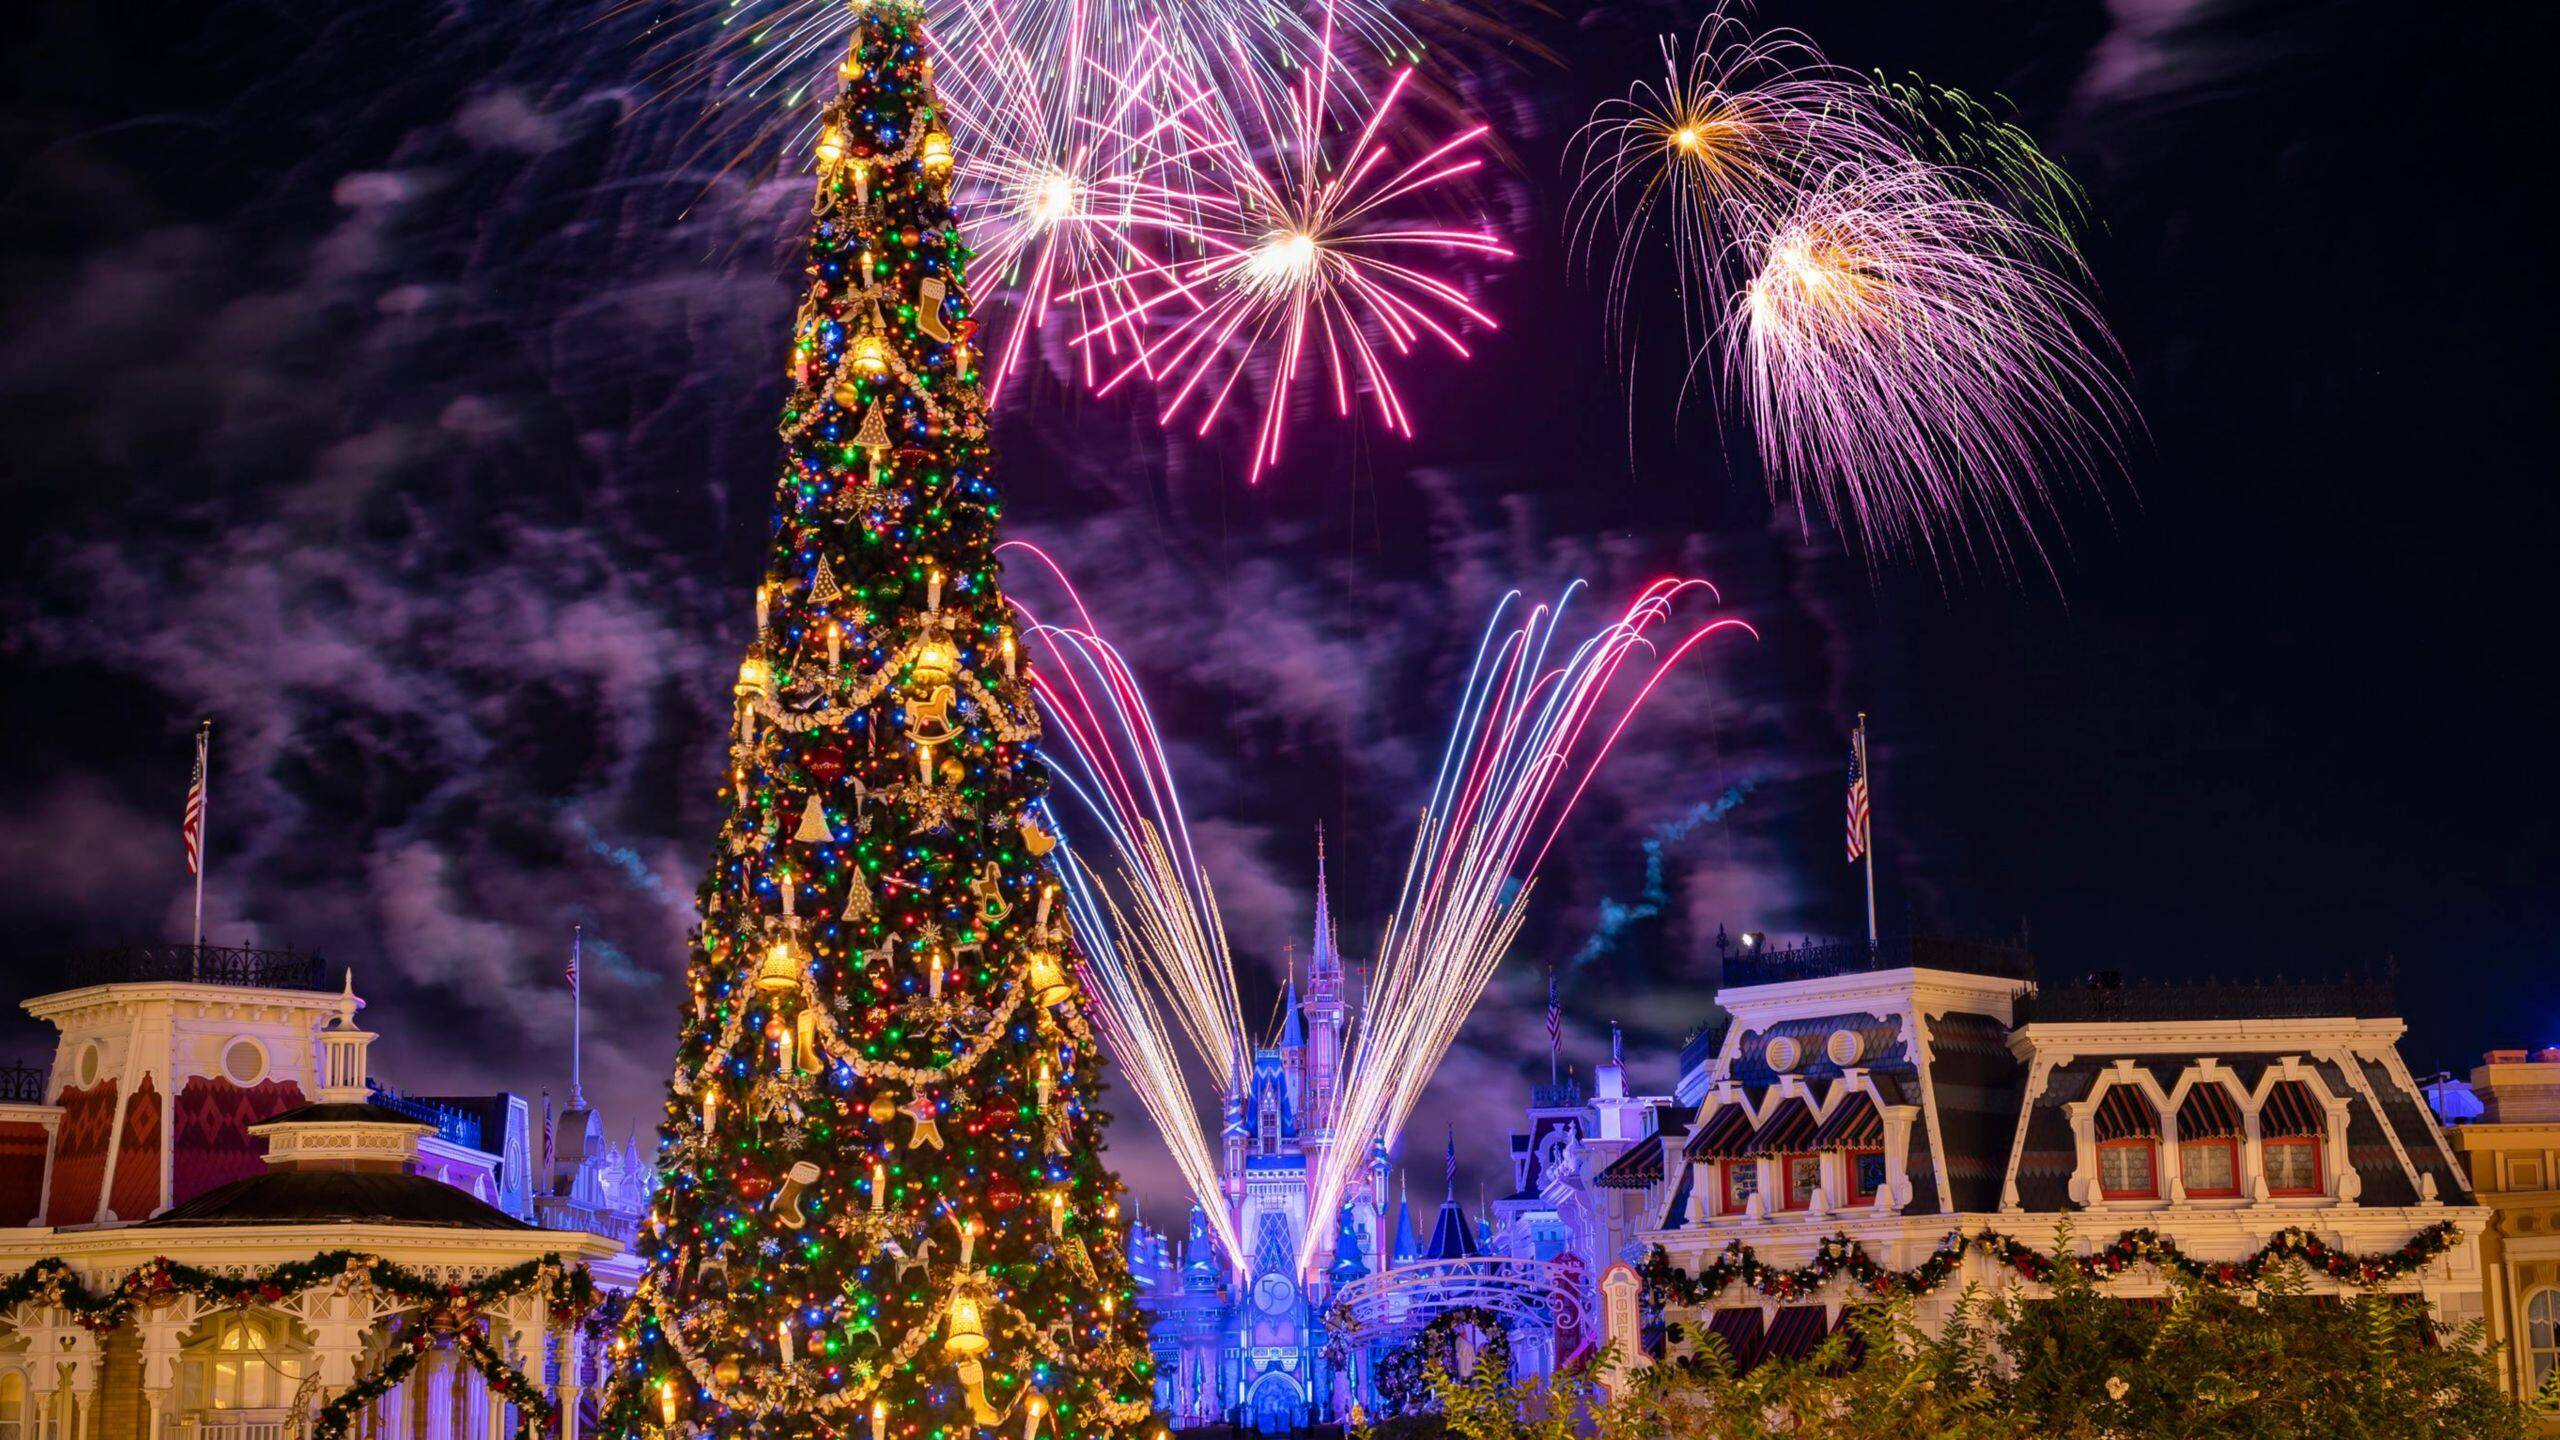 Minnie's Wonderful Christmastime Fireworks Dessert Party returns for 2022 at Walt Disney World